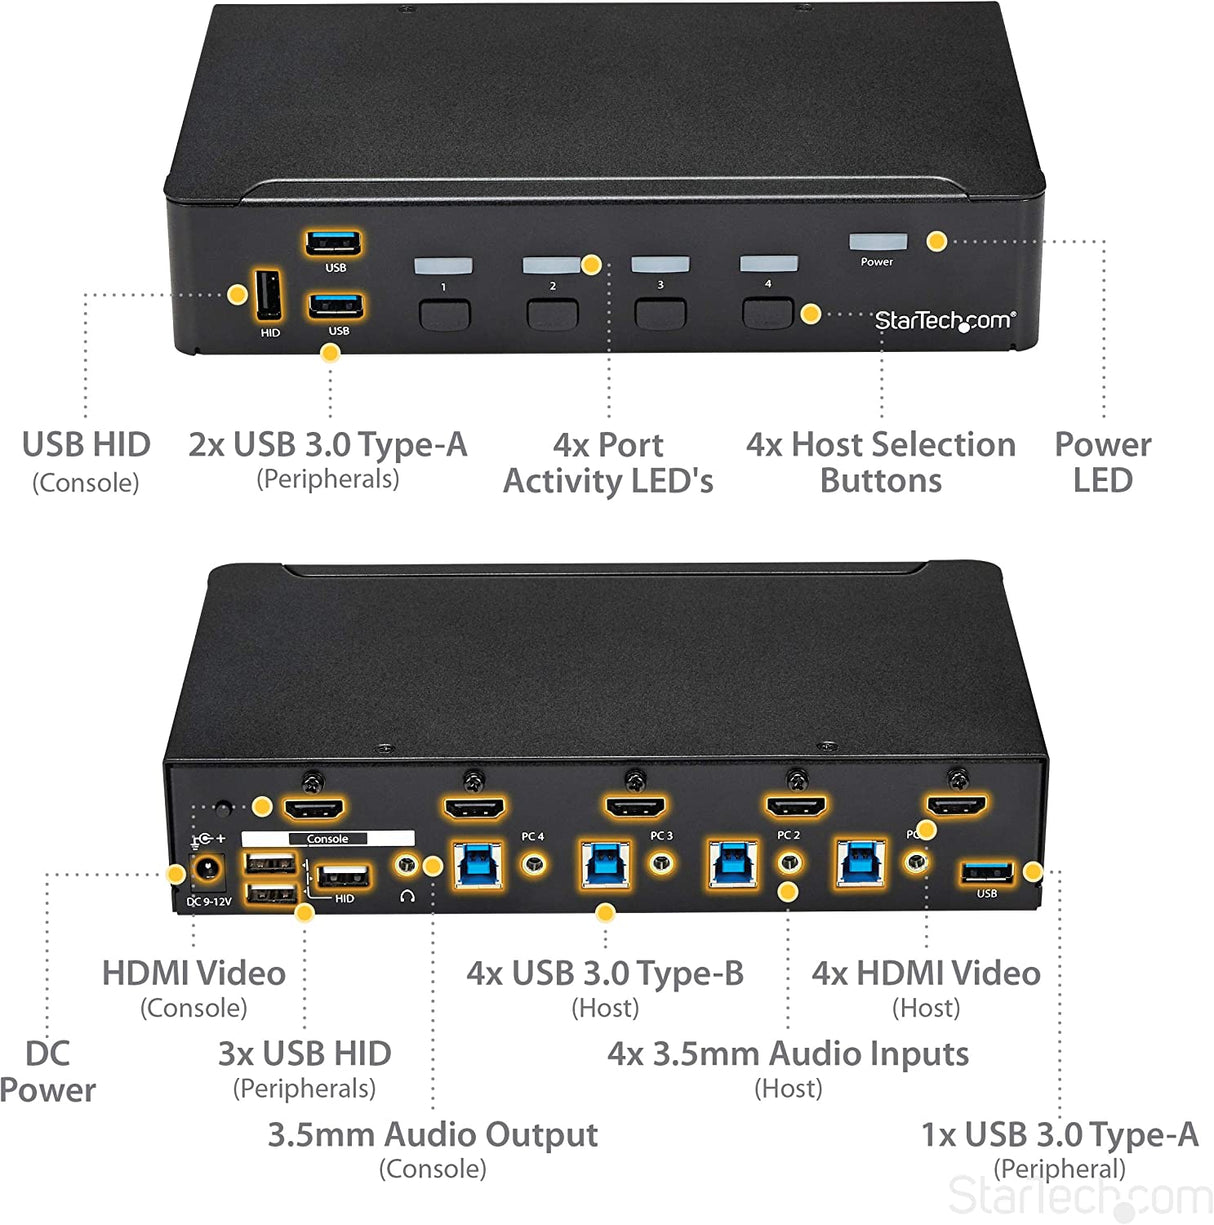 StarTech.com 4 Port HDMI KVM - HDMI KVM Switch - 1080p - USB 3.0 &amp; Audio Support - KVM Video Switch (SV431HDU3A2) 4 Port | 1 Monitor USB 3.0 | 1080p